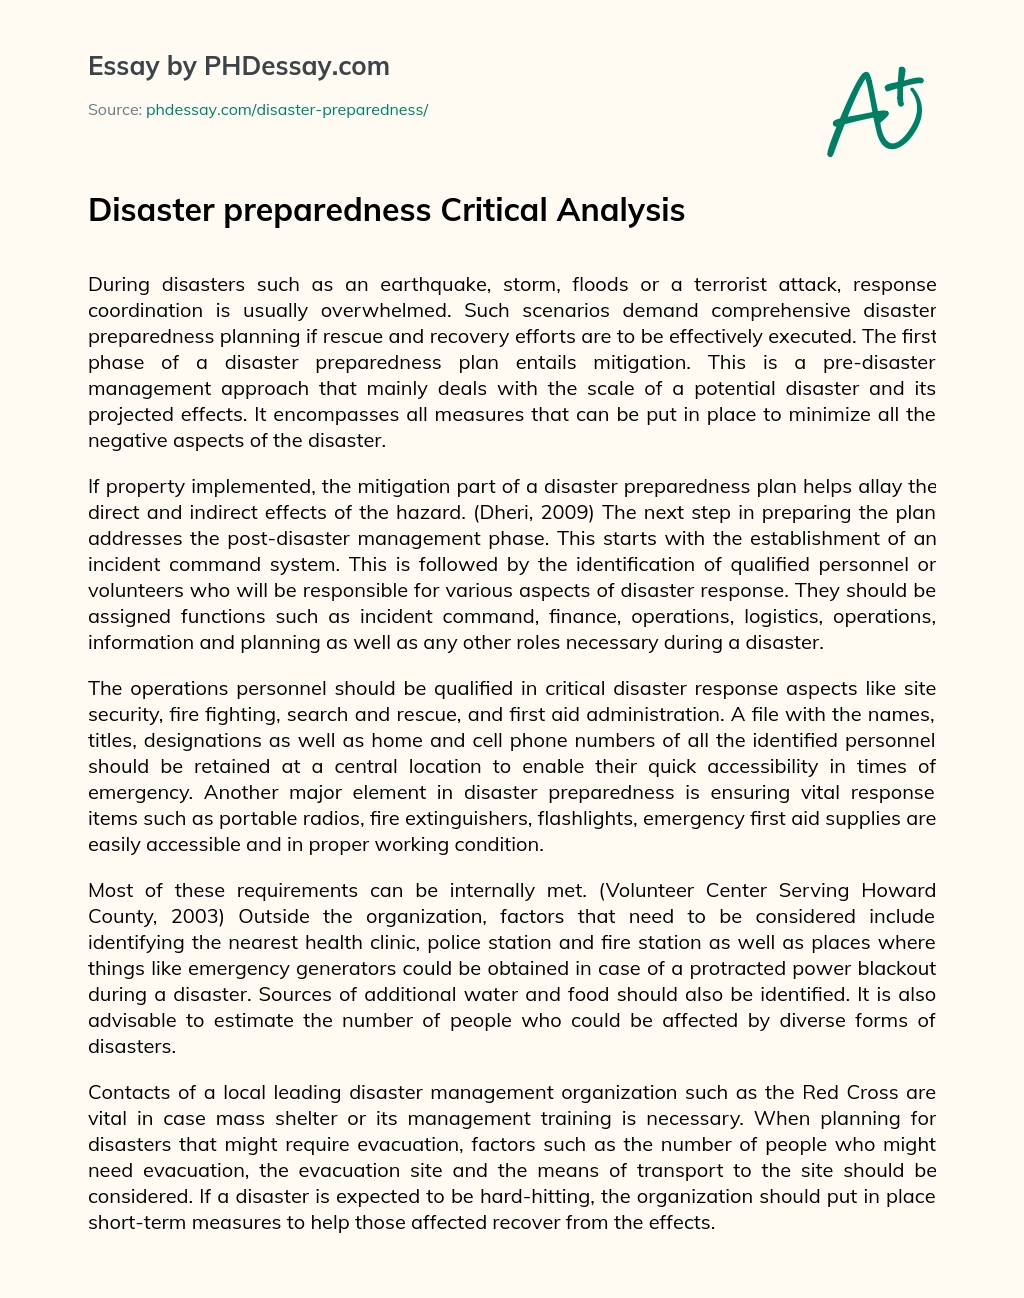 Disaster preparedness Critical Analysis essay